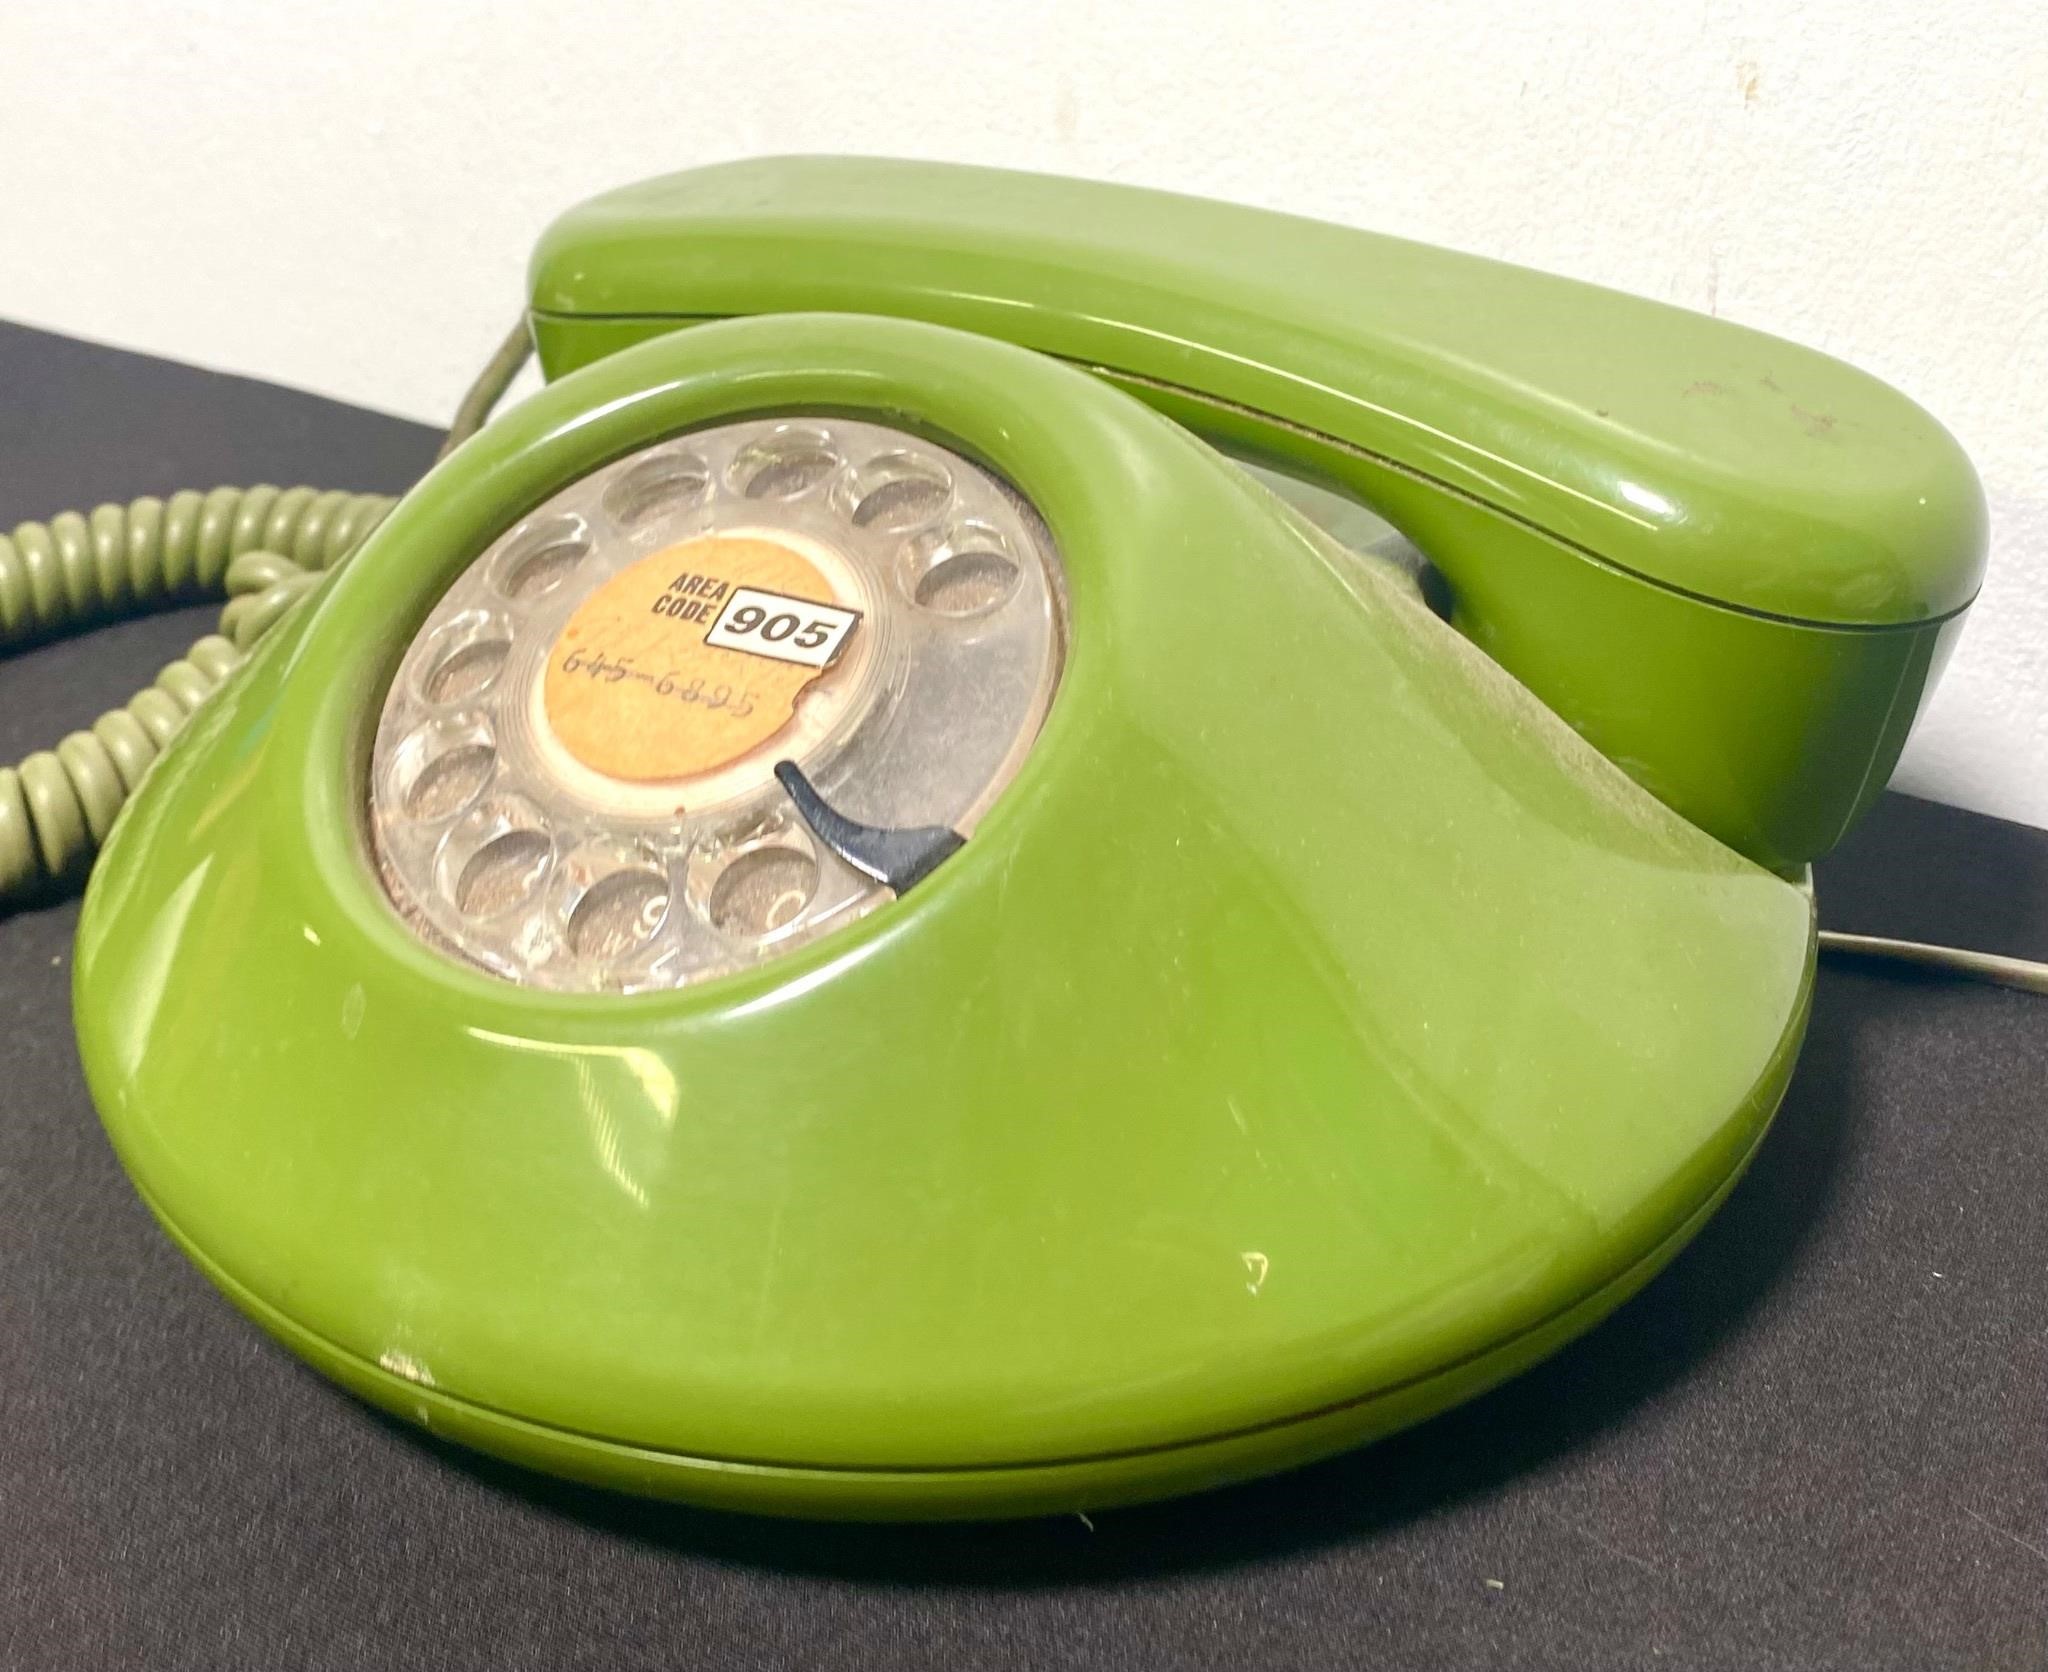 Rotary Telephone